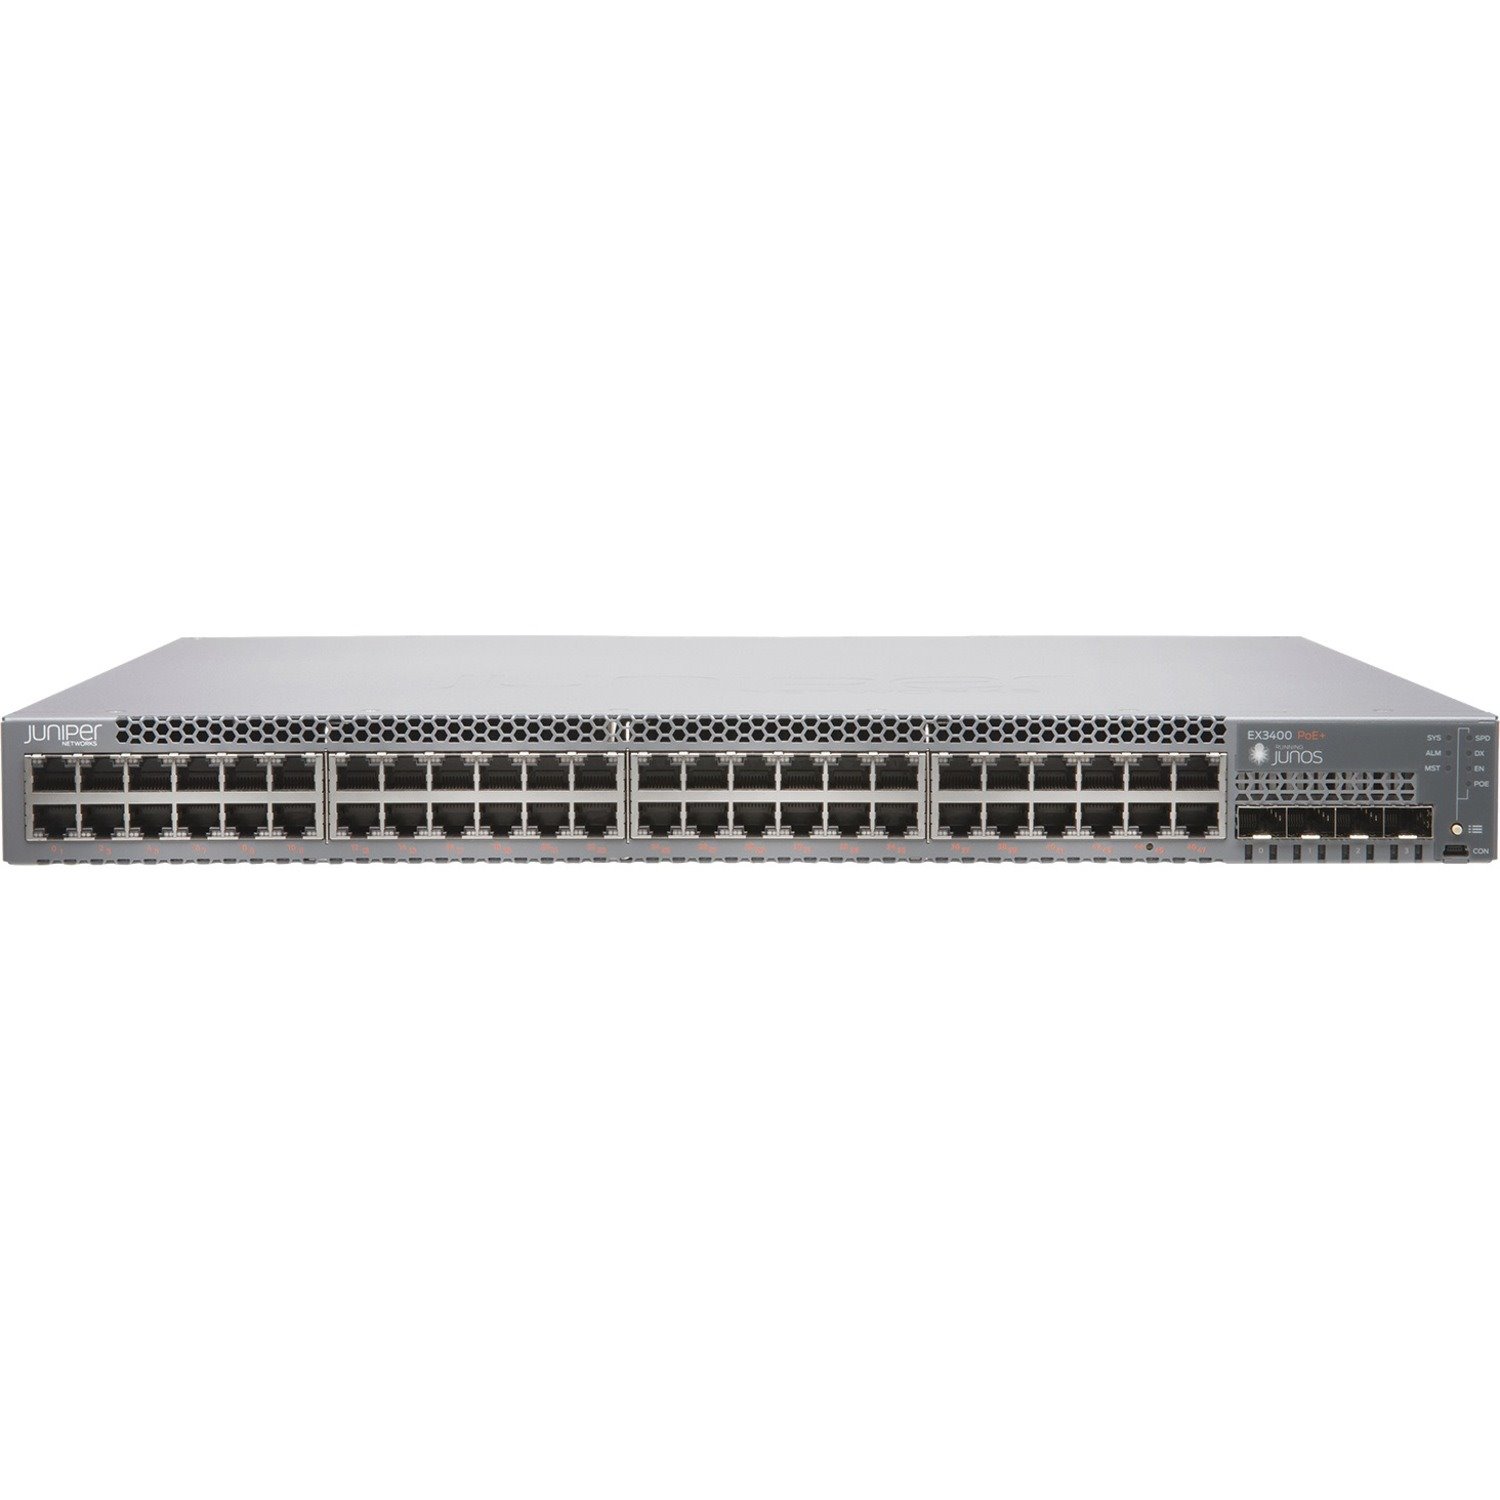 Juniper EX3400-48T Ethernet Swtich